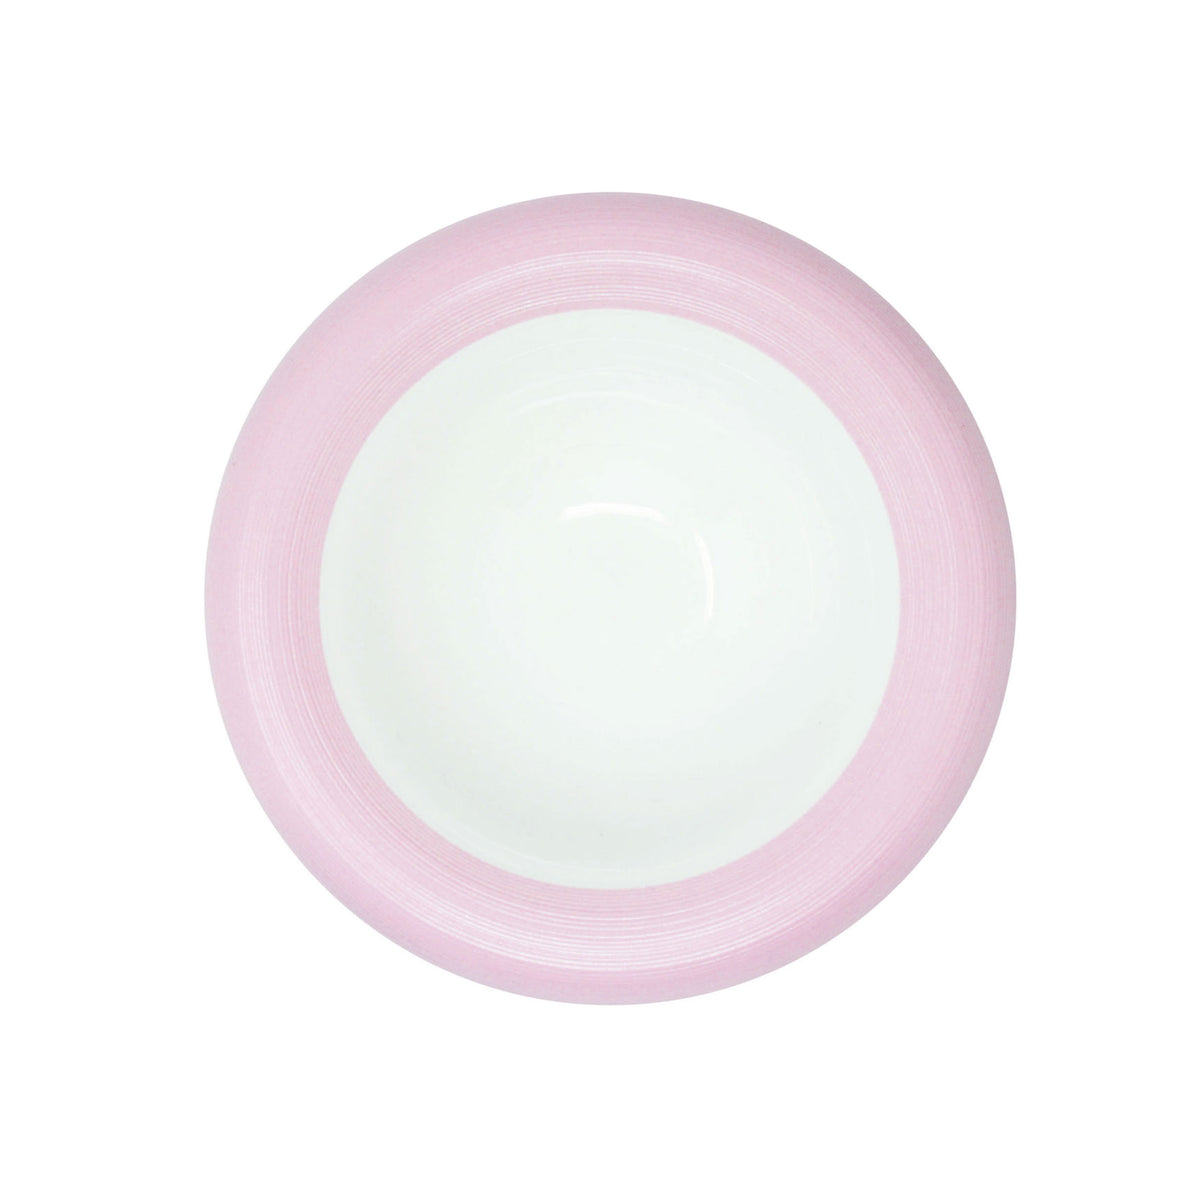 BABY HEMISPHERE Pink - Plate Bubble 11 cm